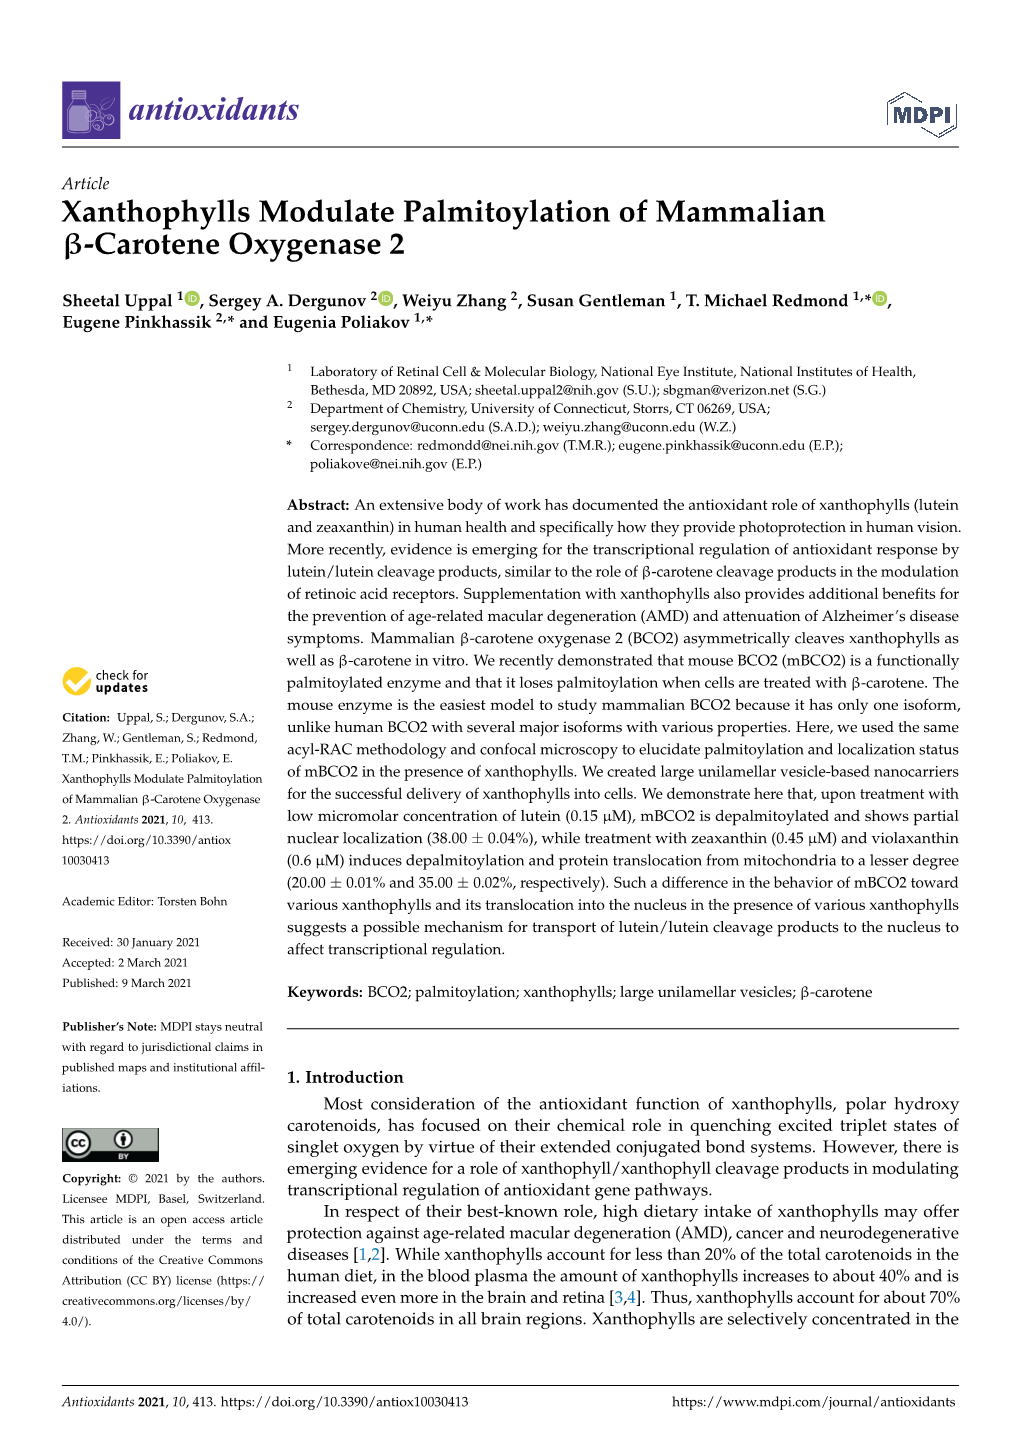 Xanthophylls Modulate Palmitoylation of Mammalian Β-Carotene Oxygenase 2